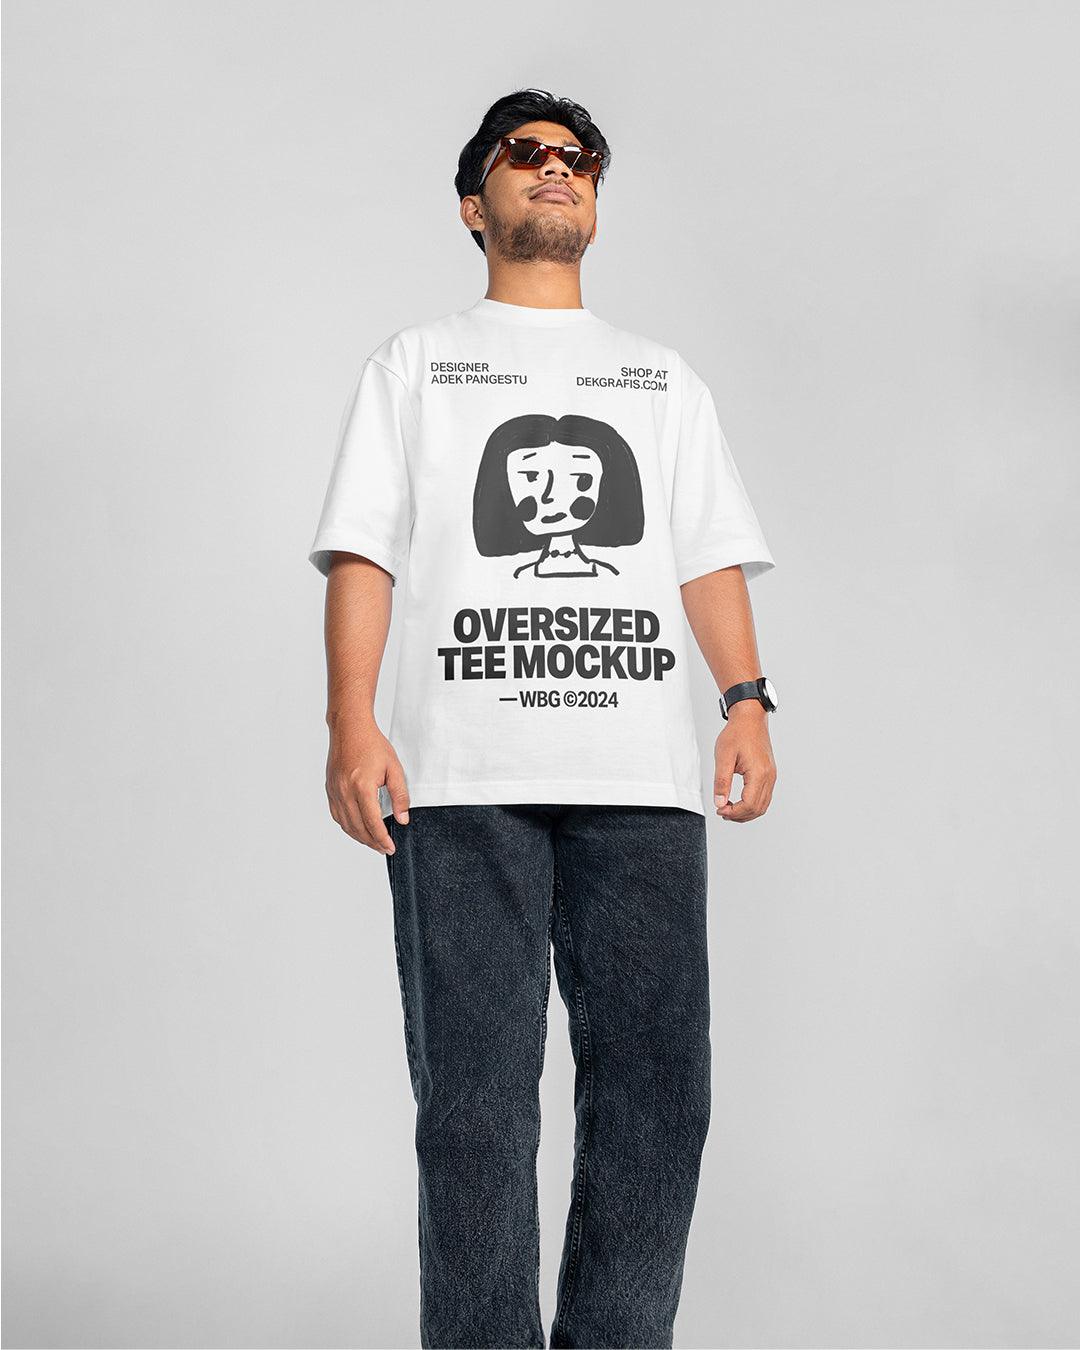 8 Man Oversized T-Shirt Mockups WBG 2024